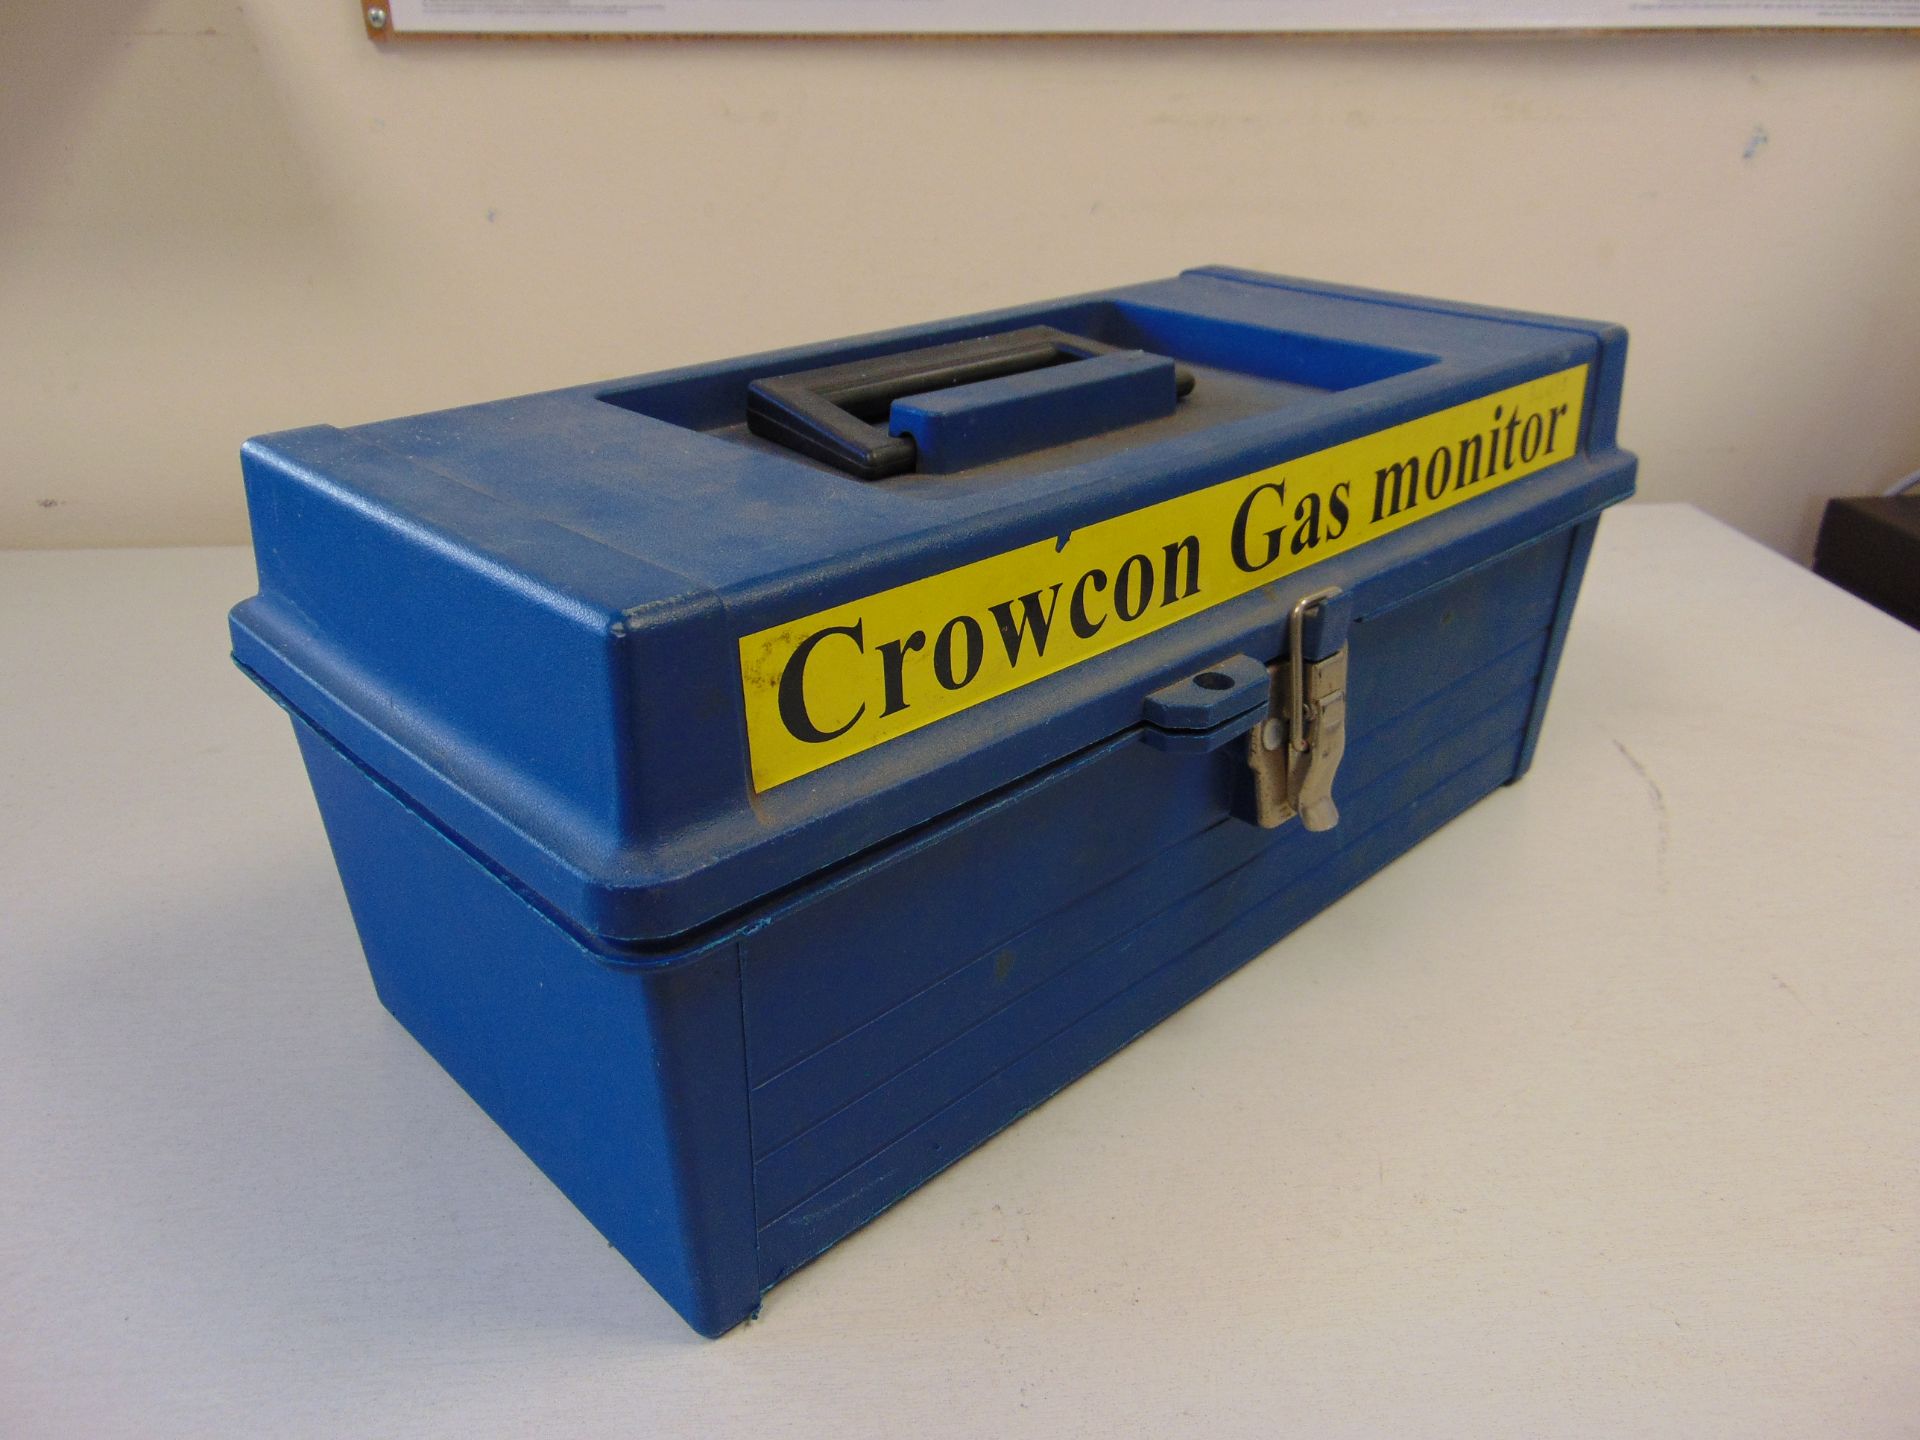 Crowcon Custodian CDL Portable Gas Monitor Kit - Image 9 of 9